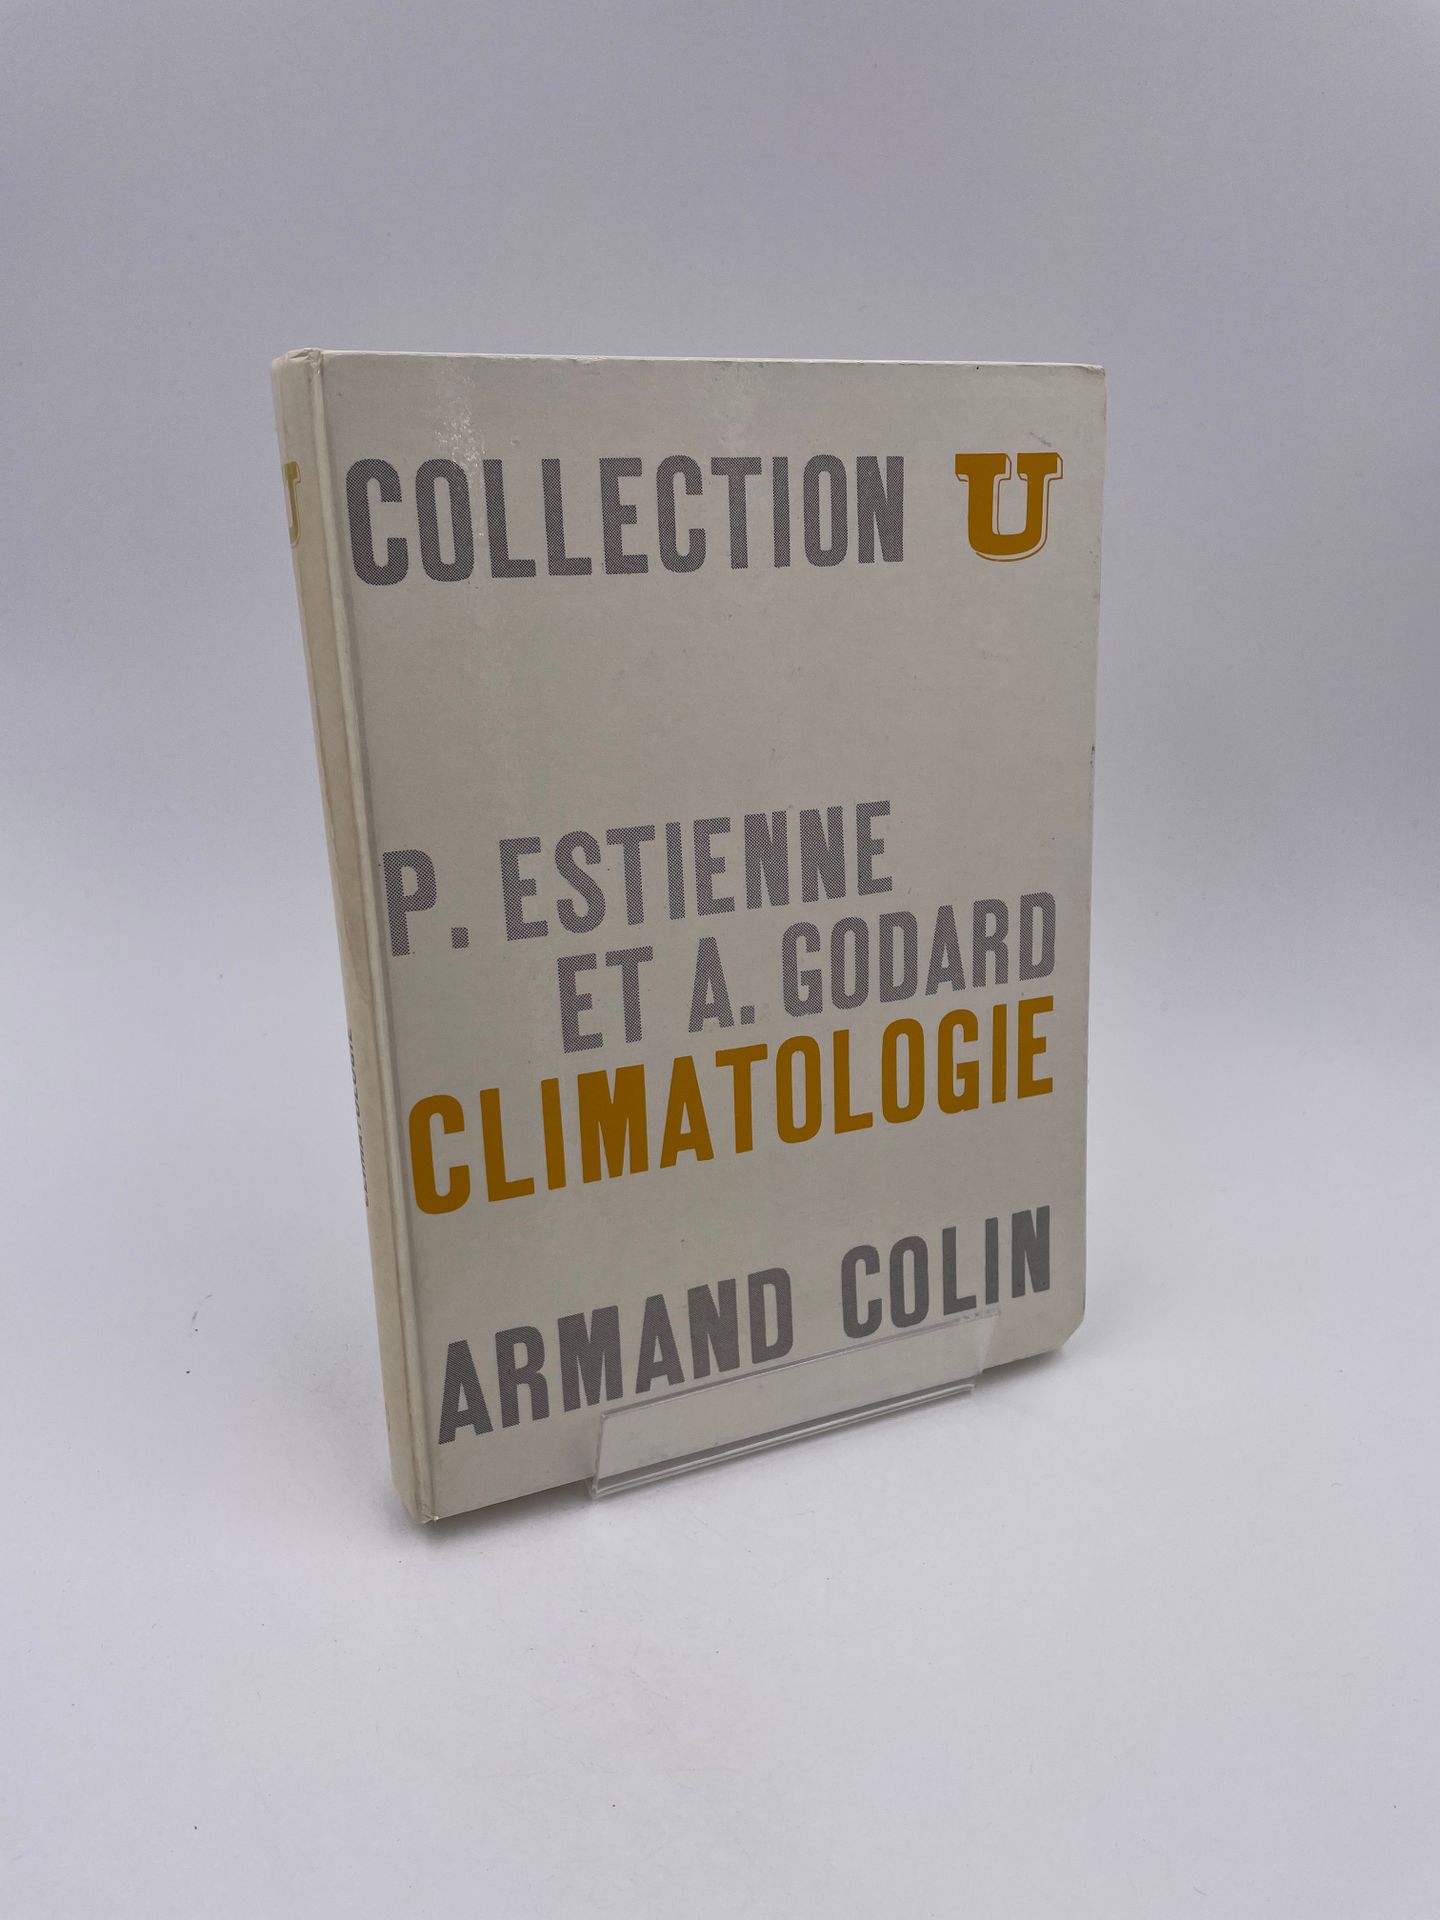 Null 1 Volume : "CLIMATOLOGIE", Pierre Estienne, Alain Godard, Collection U, Sér&hellip;